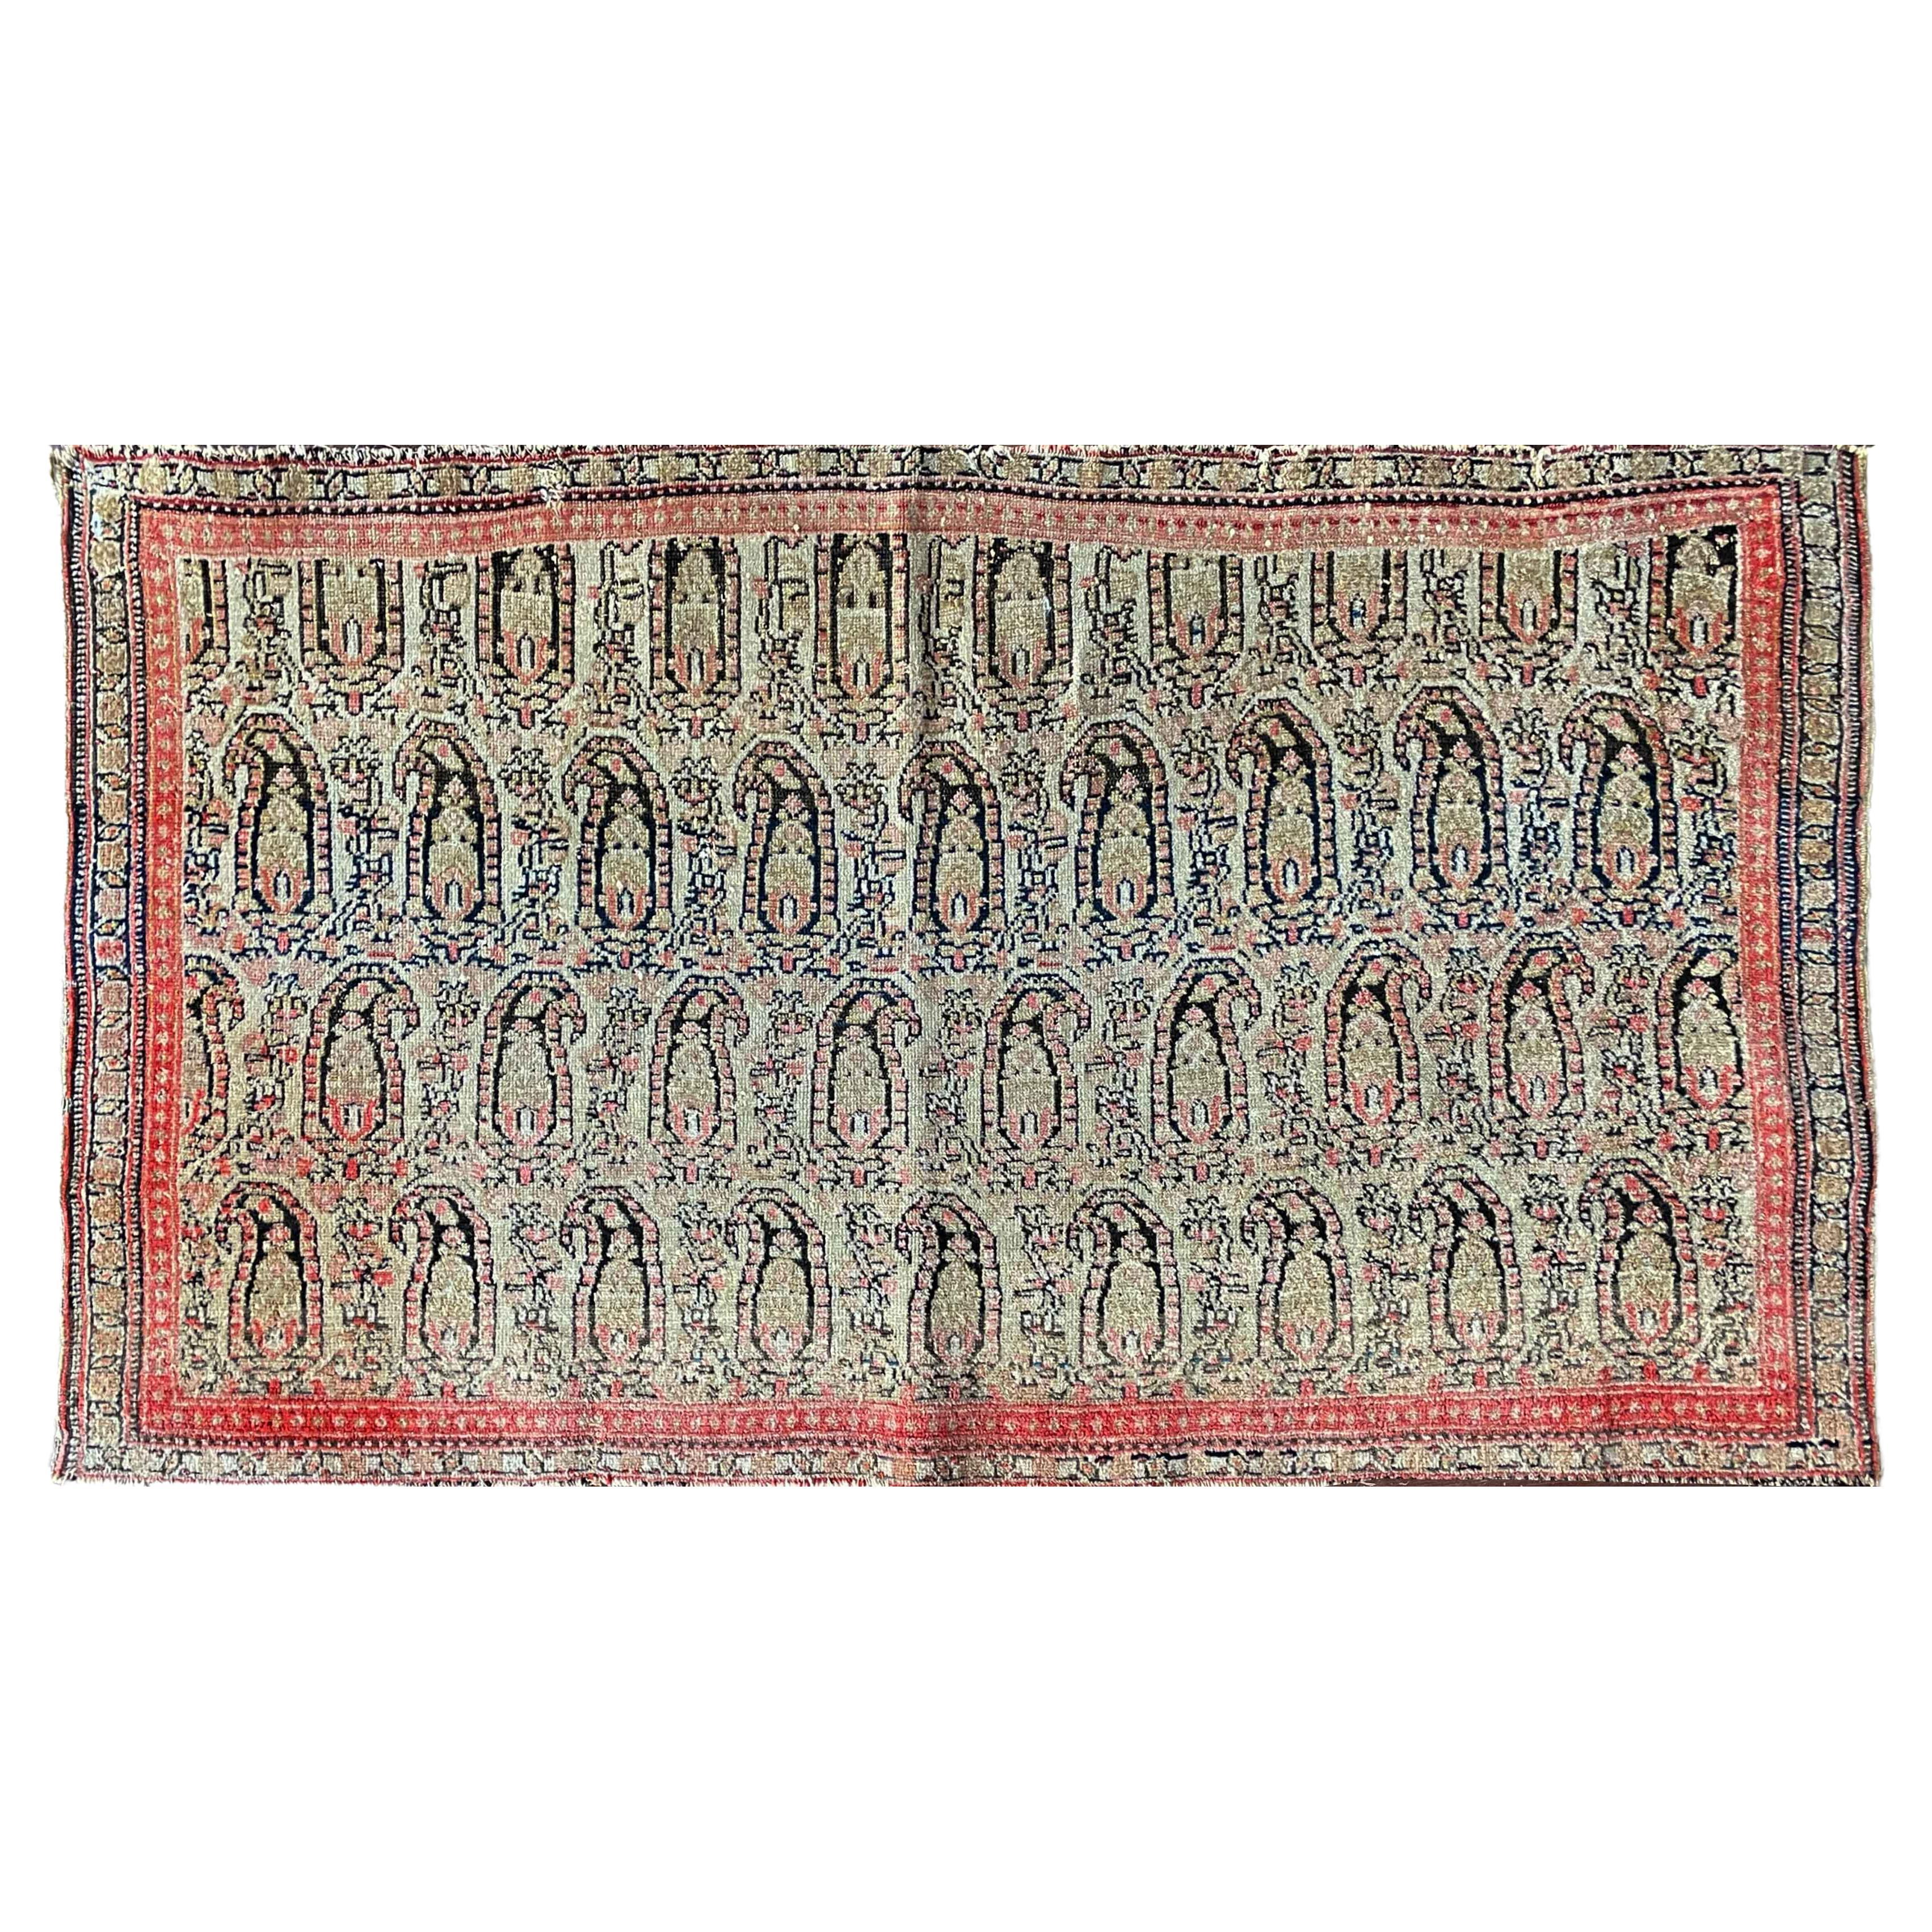 Antique Persian Senneh Rug, very fine